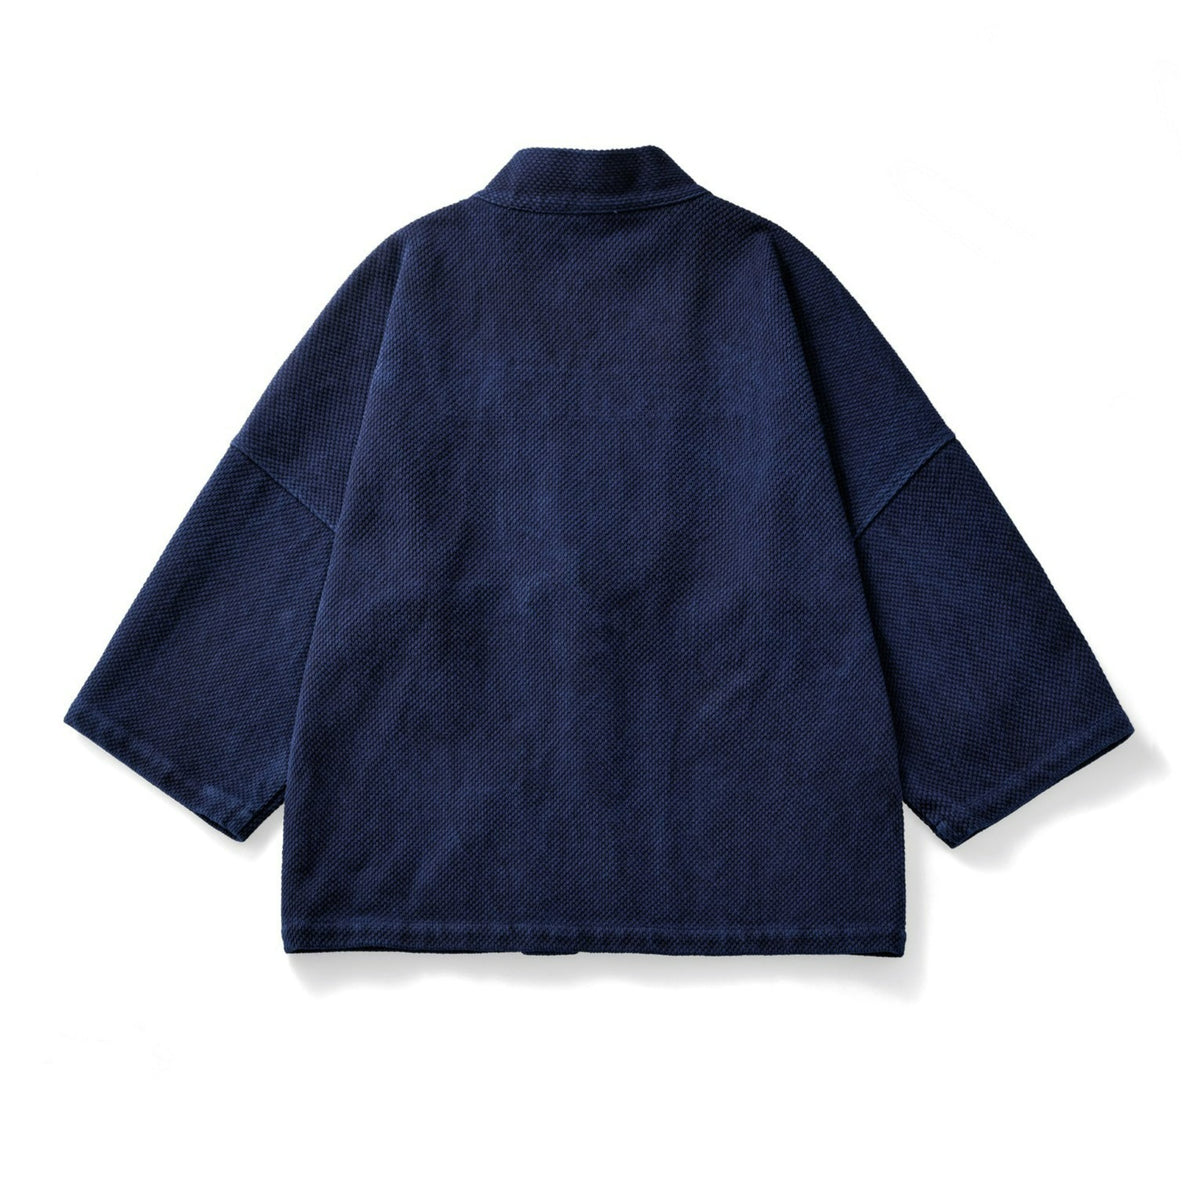 Indigo Classic Flannel Kimono Jacket